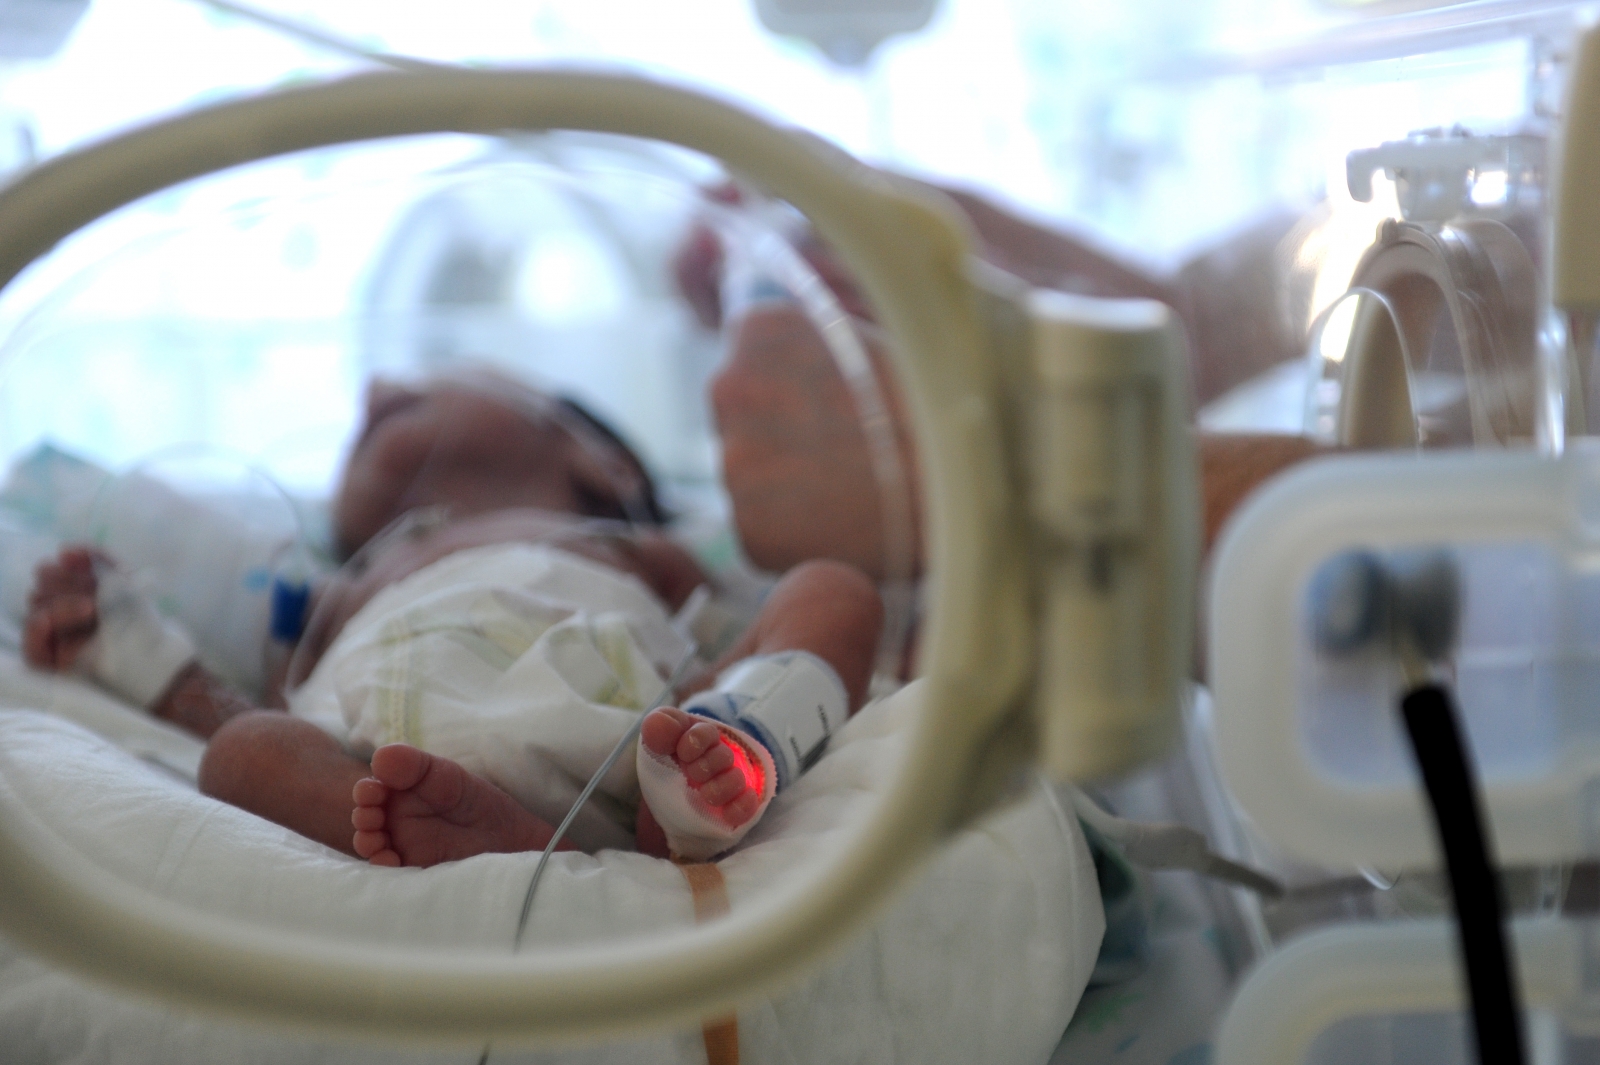 Infant in hospital incubator